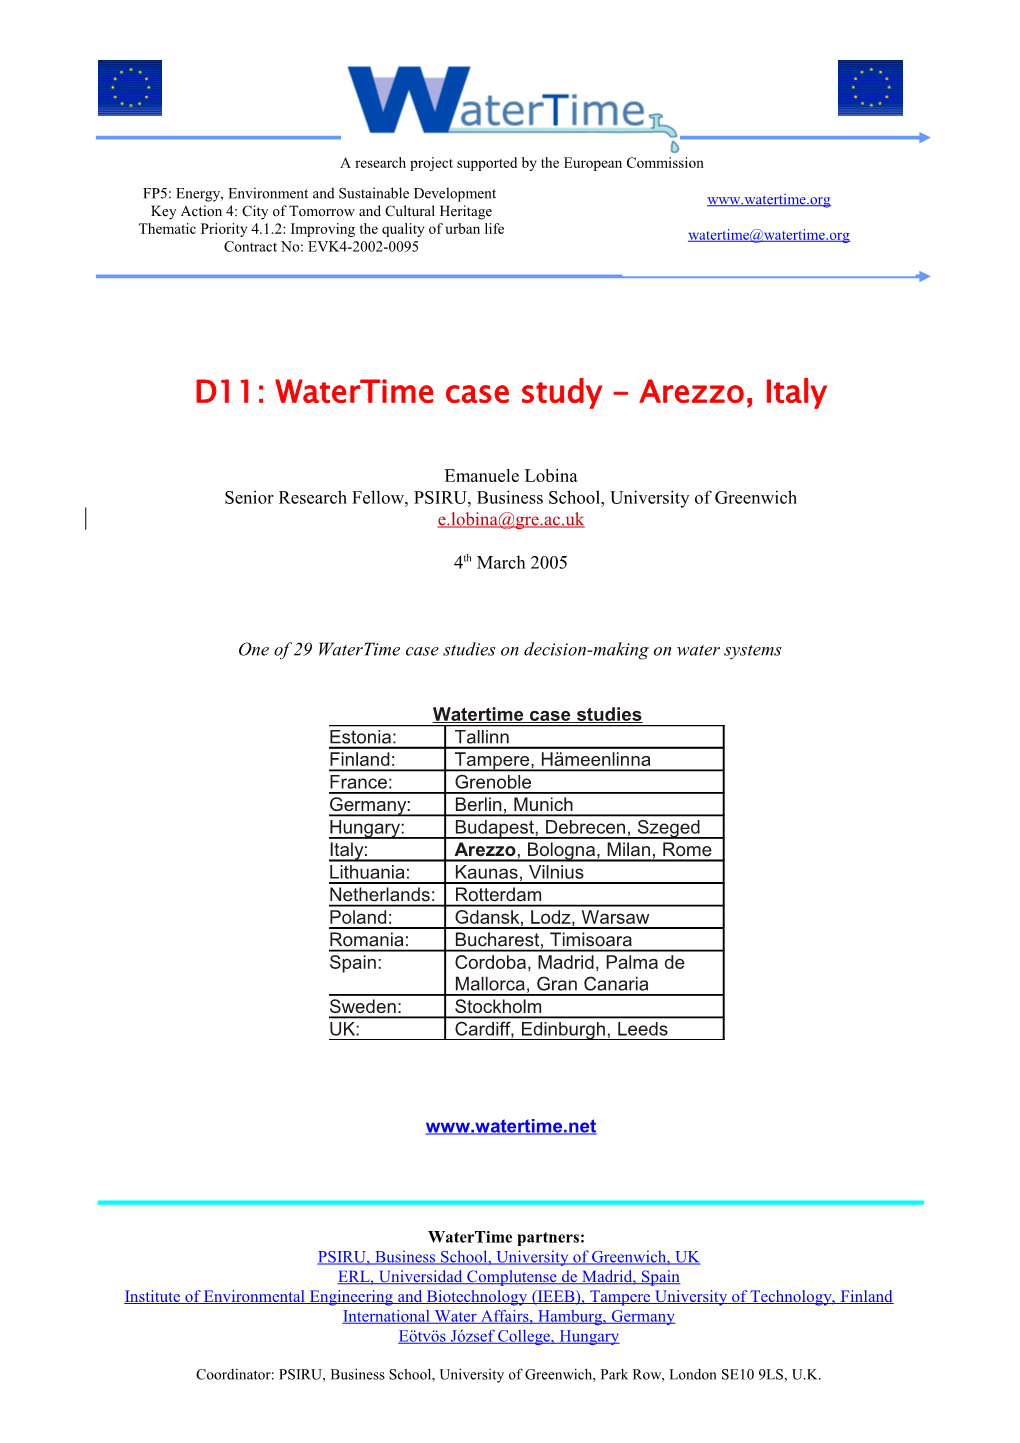 D11: Watertime Case Study - Arezzo, Italy